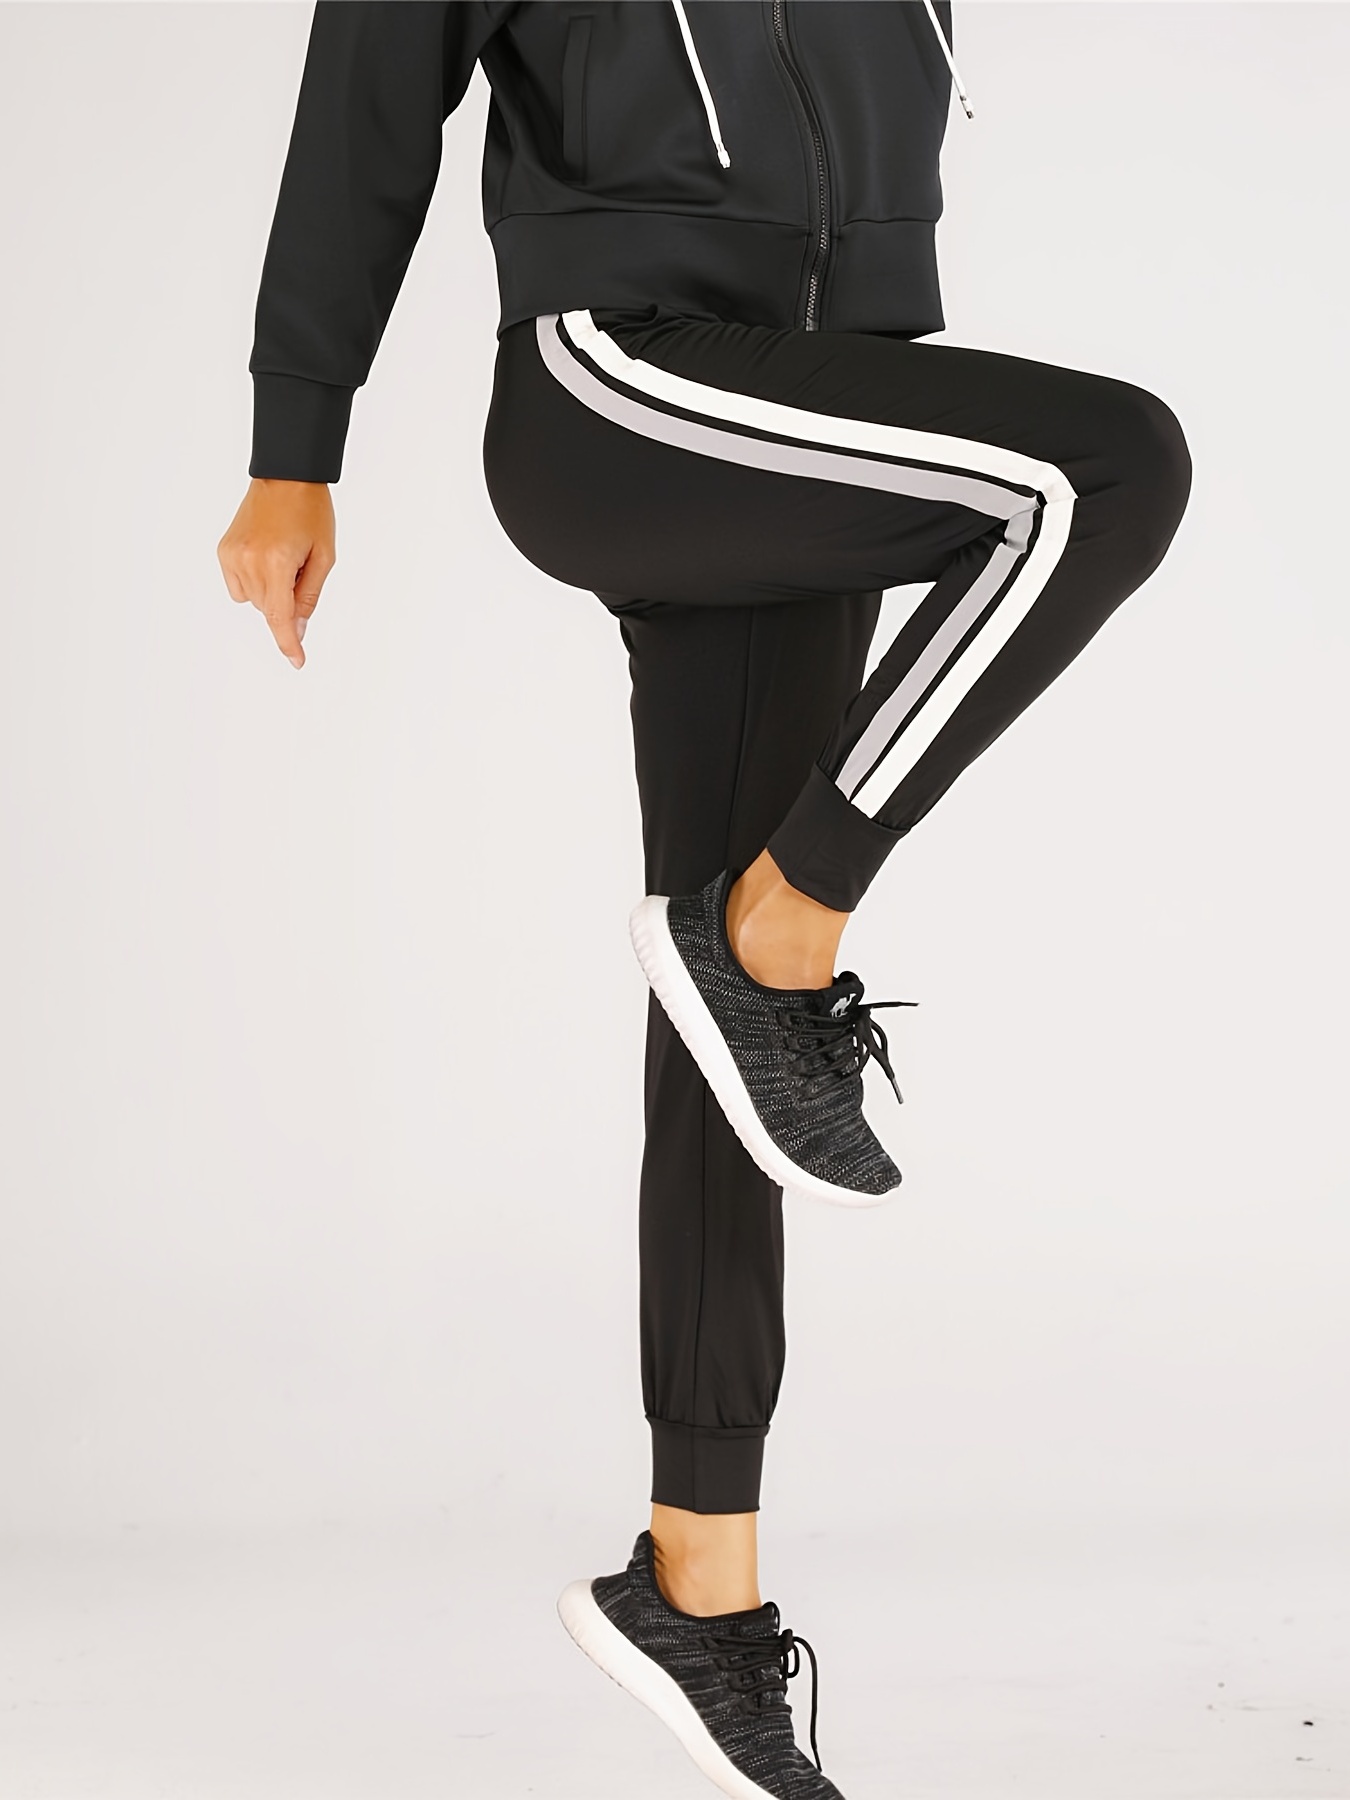 Topshop black white gray colorblock side stripe leggings - size 4 small